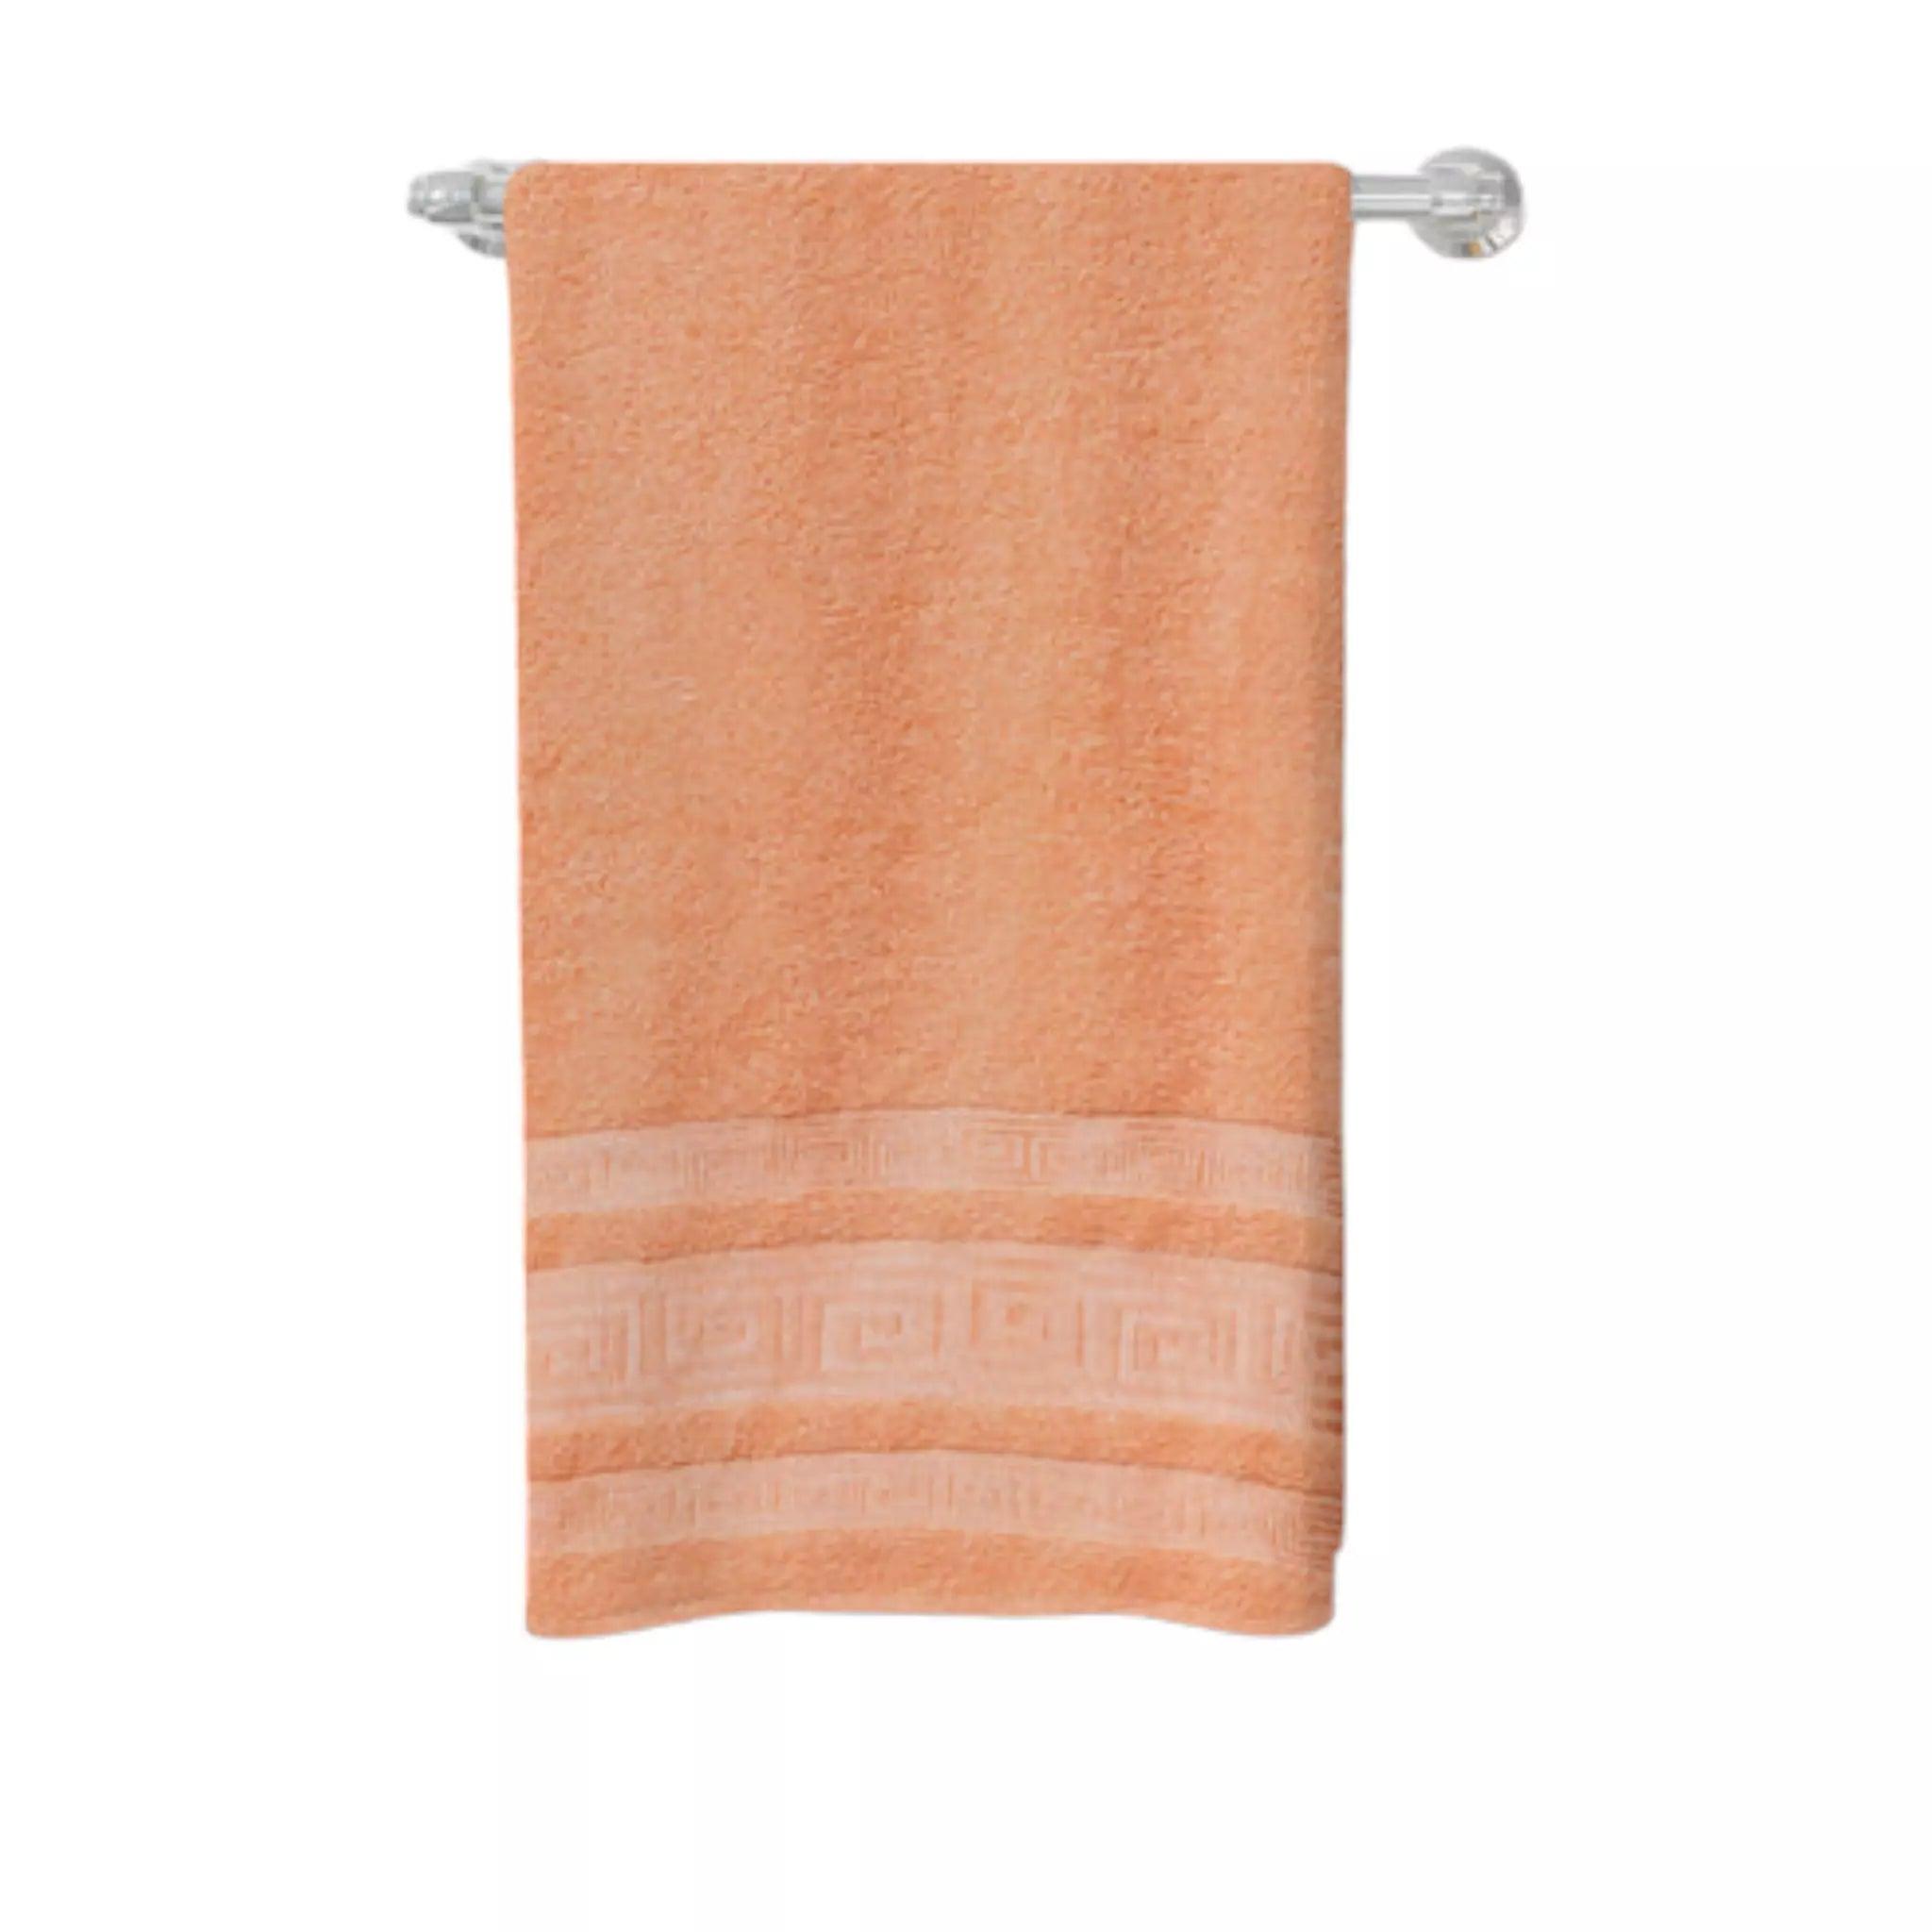 Premium Quality Soft Cotton Towel (Peach) - Dash Racegear 